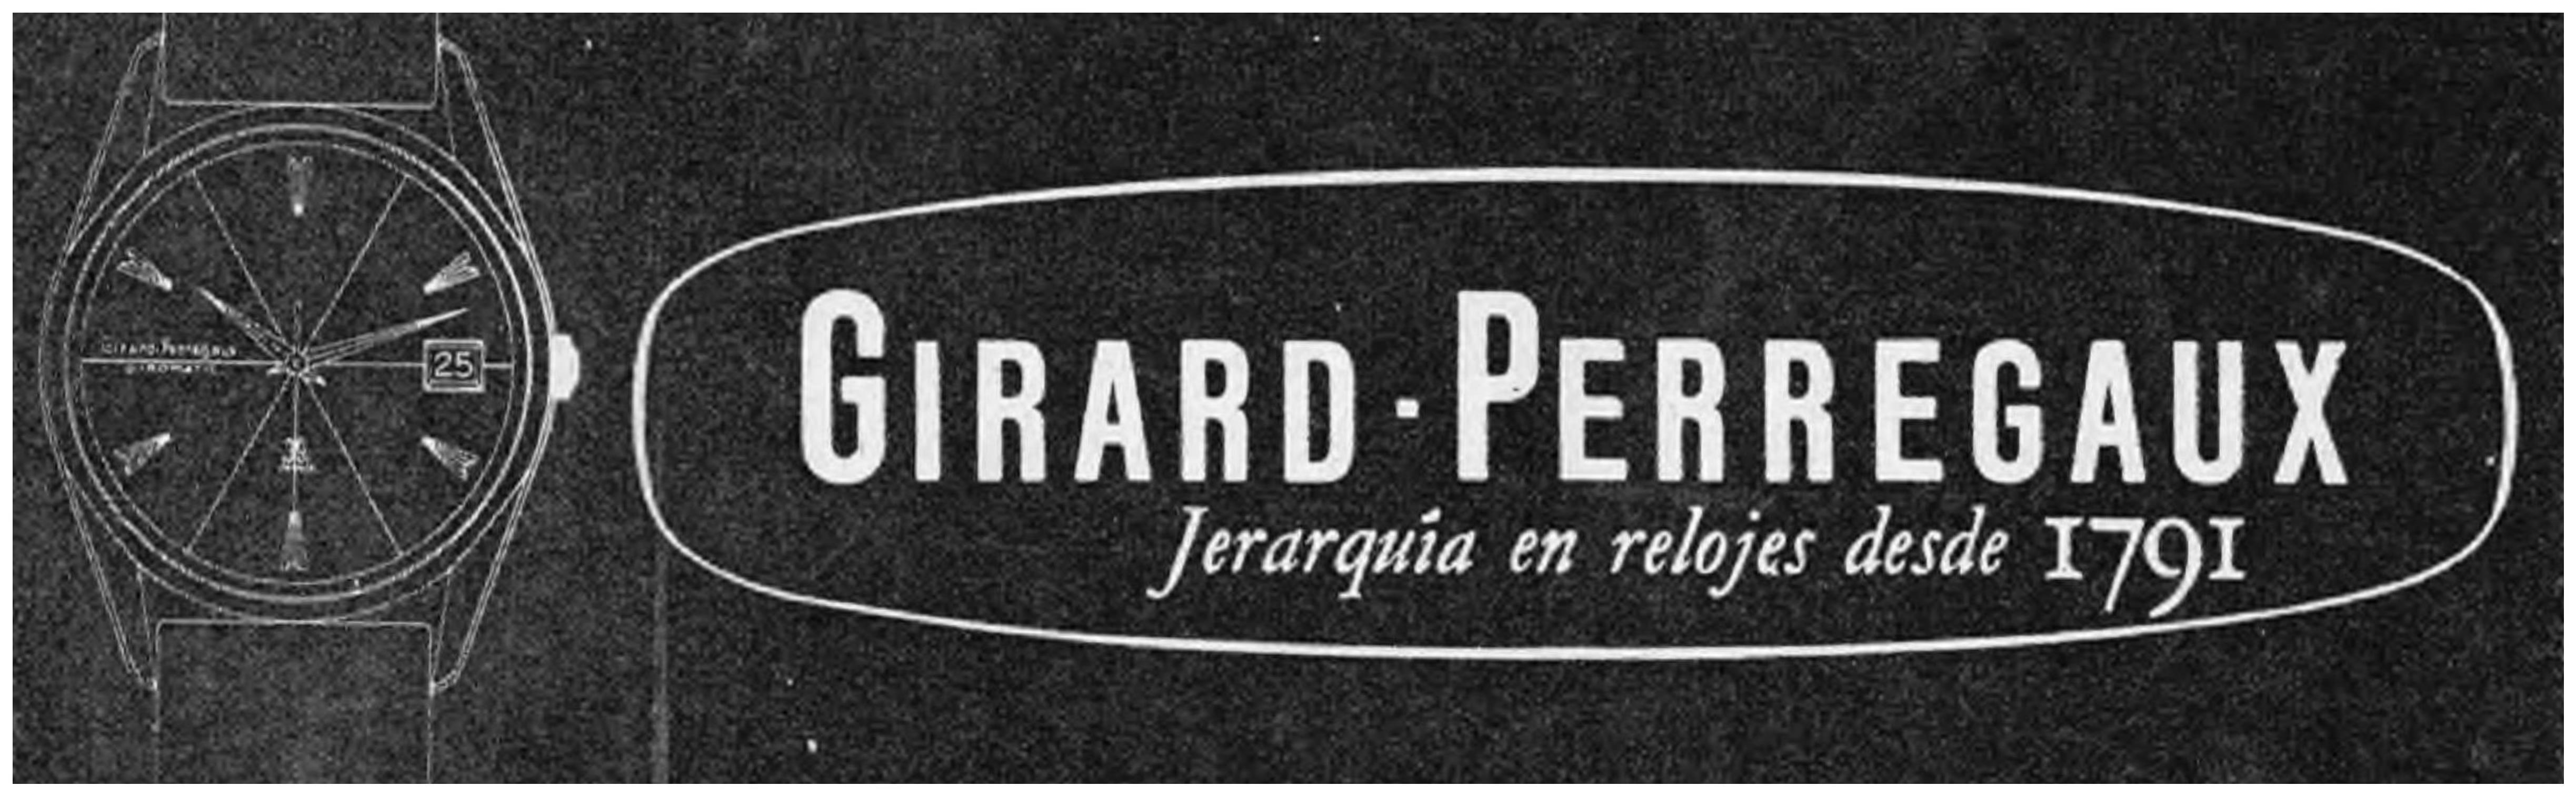 Girard-Perregaux 1962 14.jpg